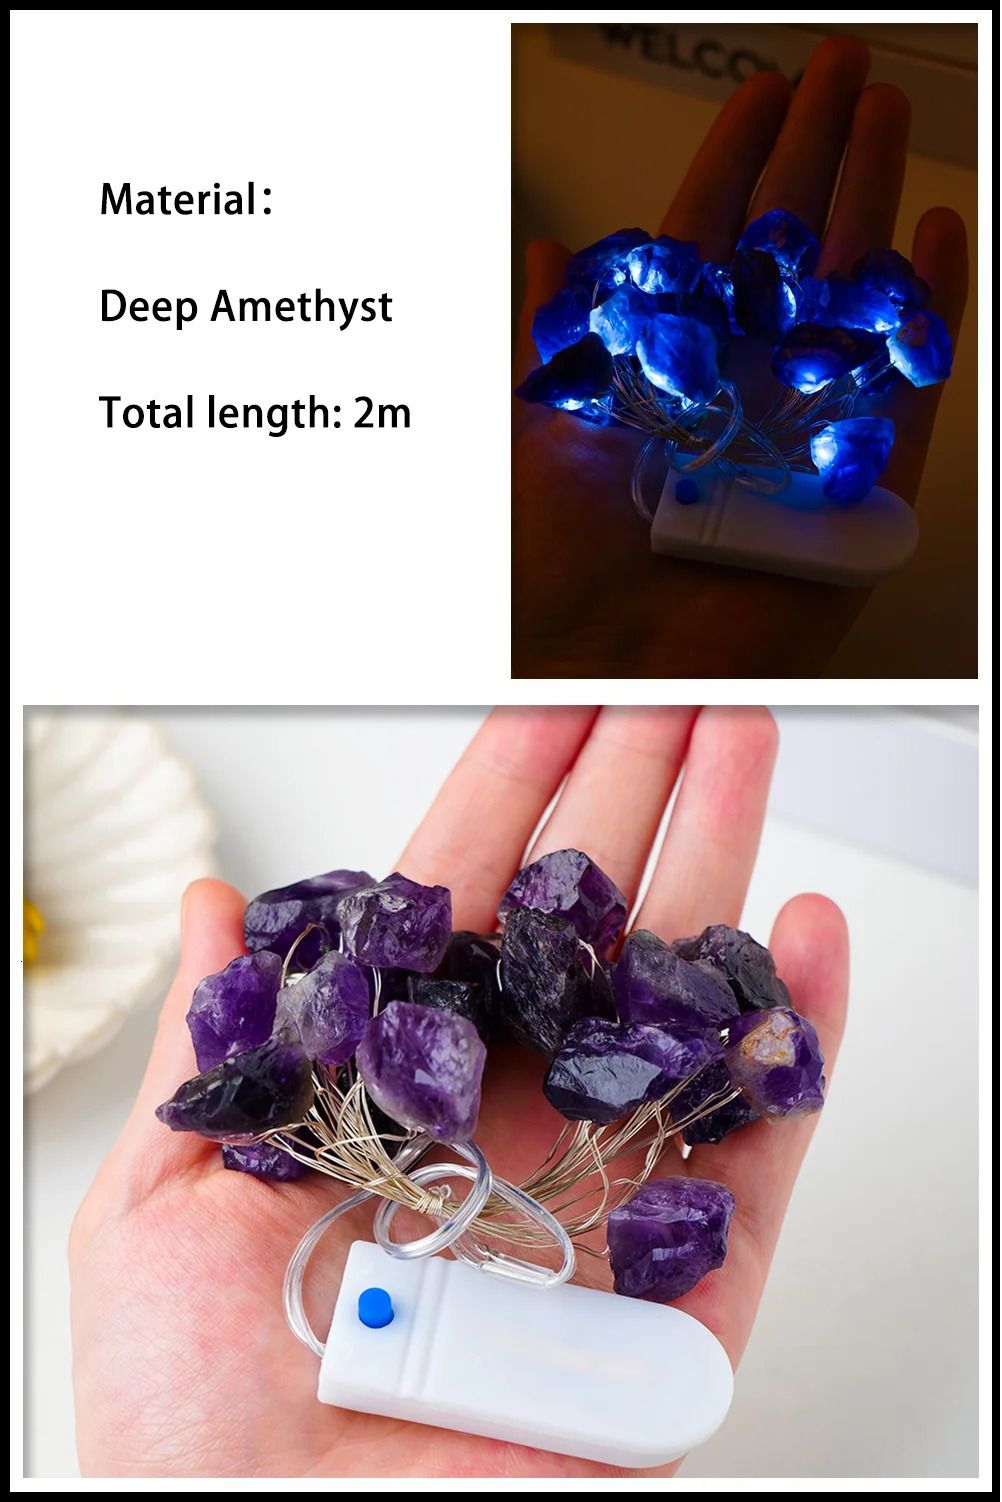 Deep Amethyst-2m